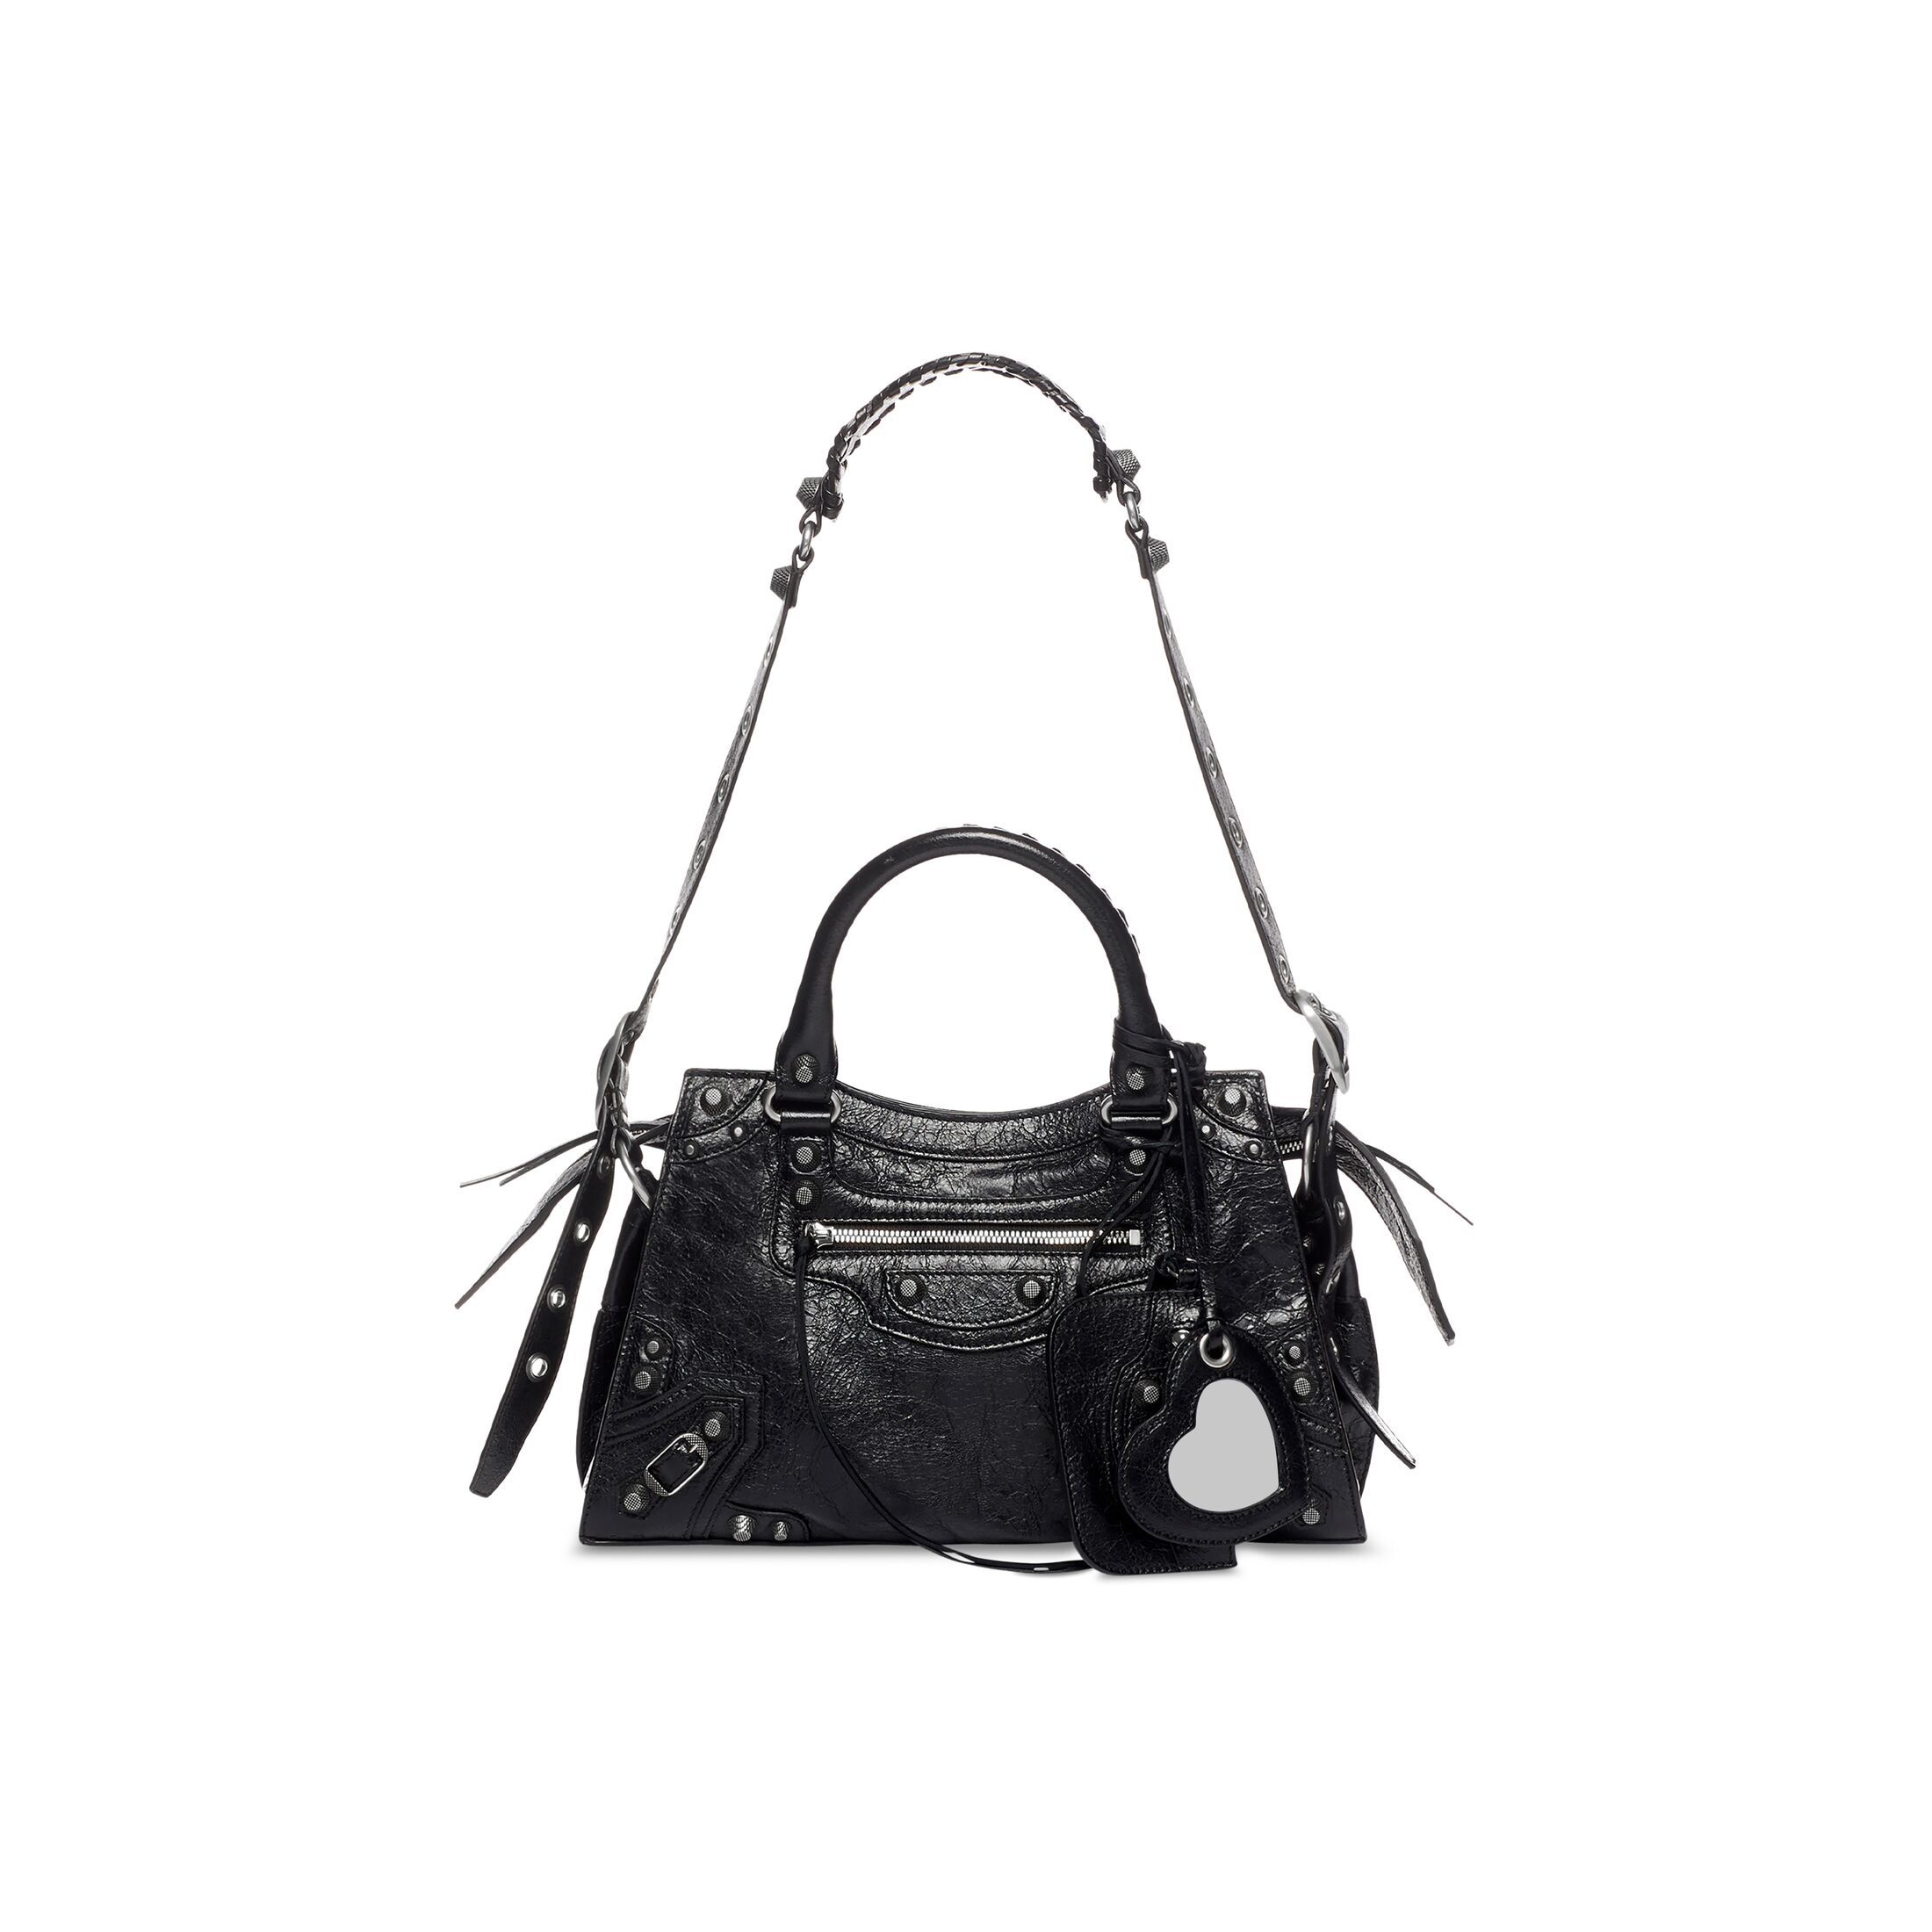 Neo Cagole City Small Handbag in black Arena lambskin, aged-silver hardware | Balenciaga